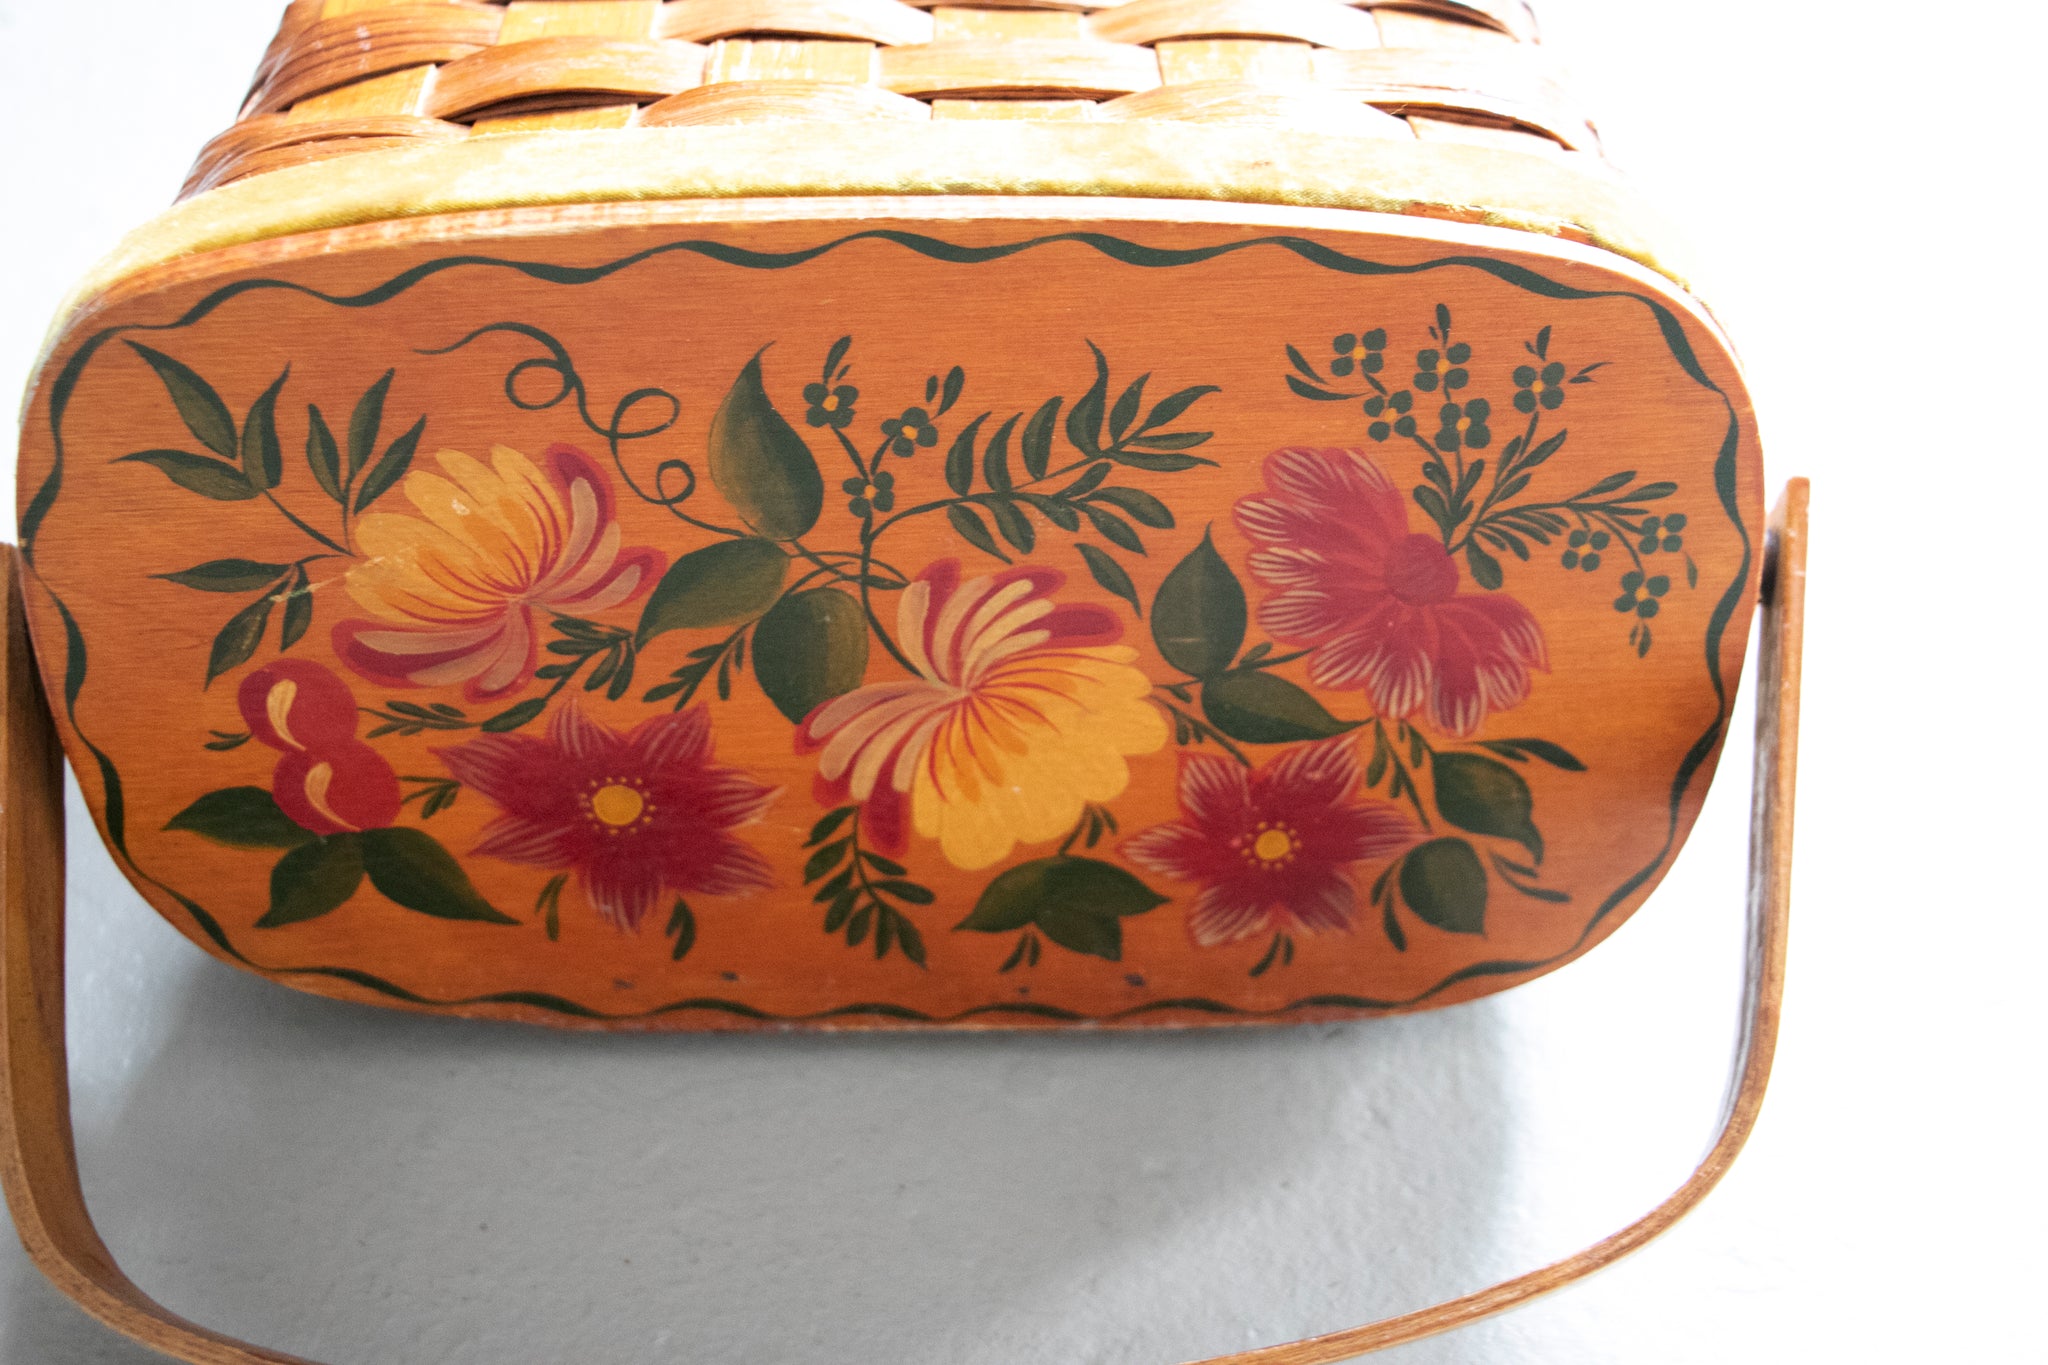 1970s Basket Purse Woven Wooden Hand Painted Bag – Deja Vintage